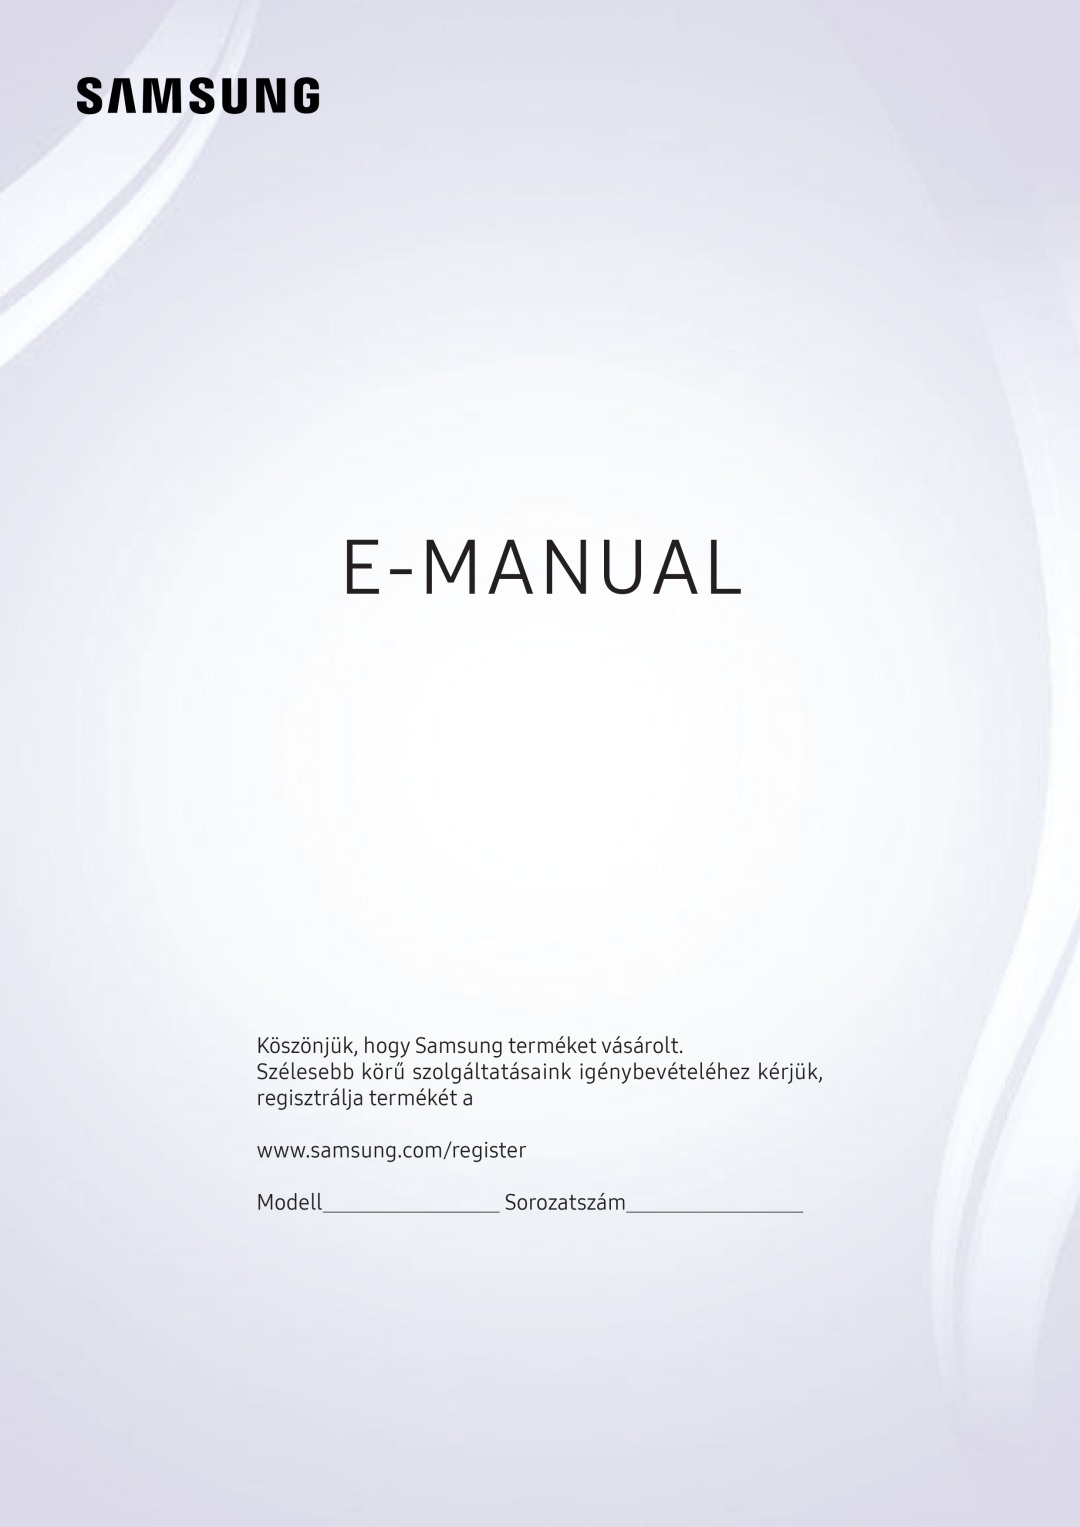 Samsung UE49KS9002TXXH, UE50KU6000WXXH manual E-Manual, Благодарим за приобретение данного, Модель, Серийный номер 